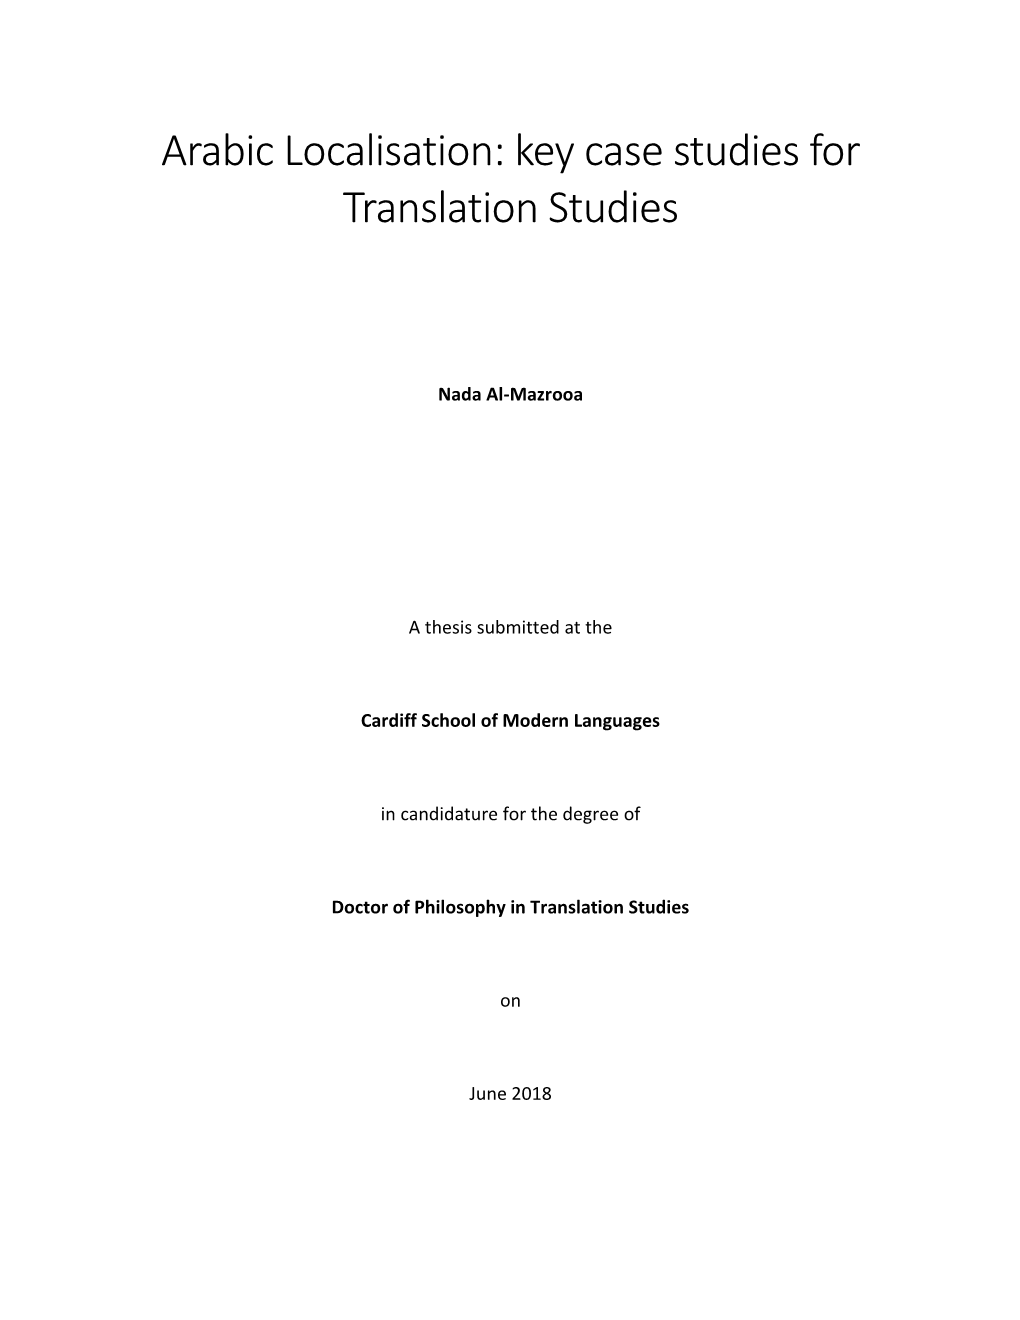 Arabic Localisation: Key Case Studies for Translation Studies